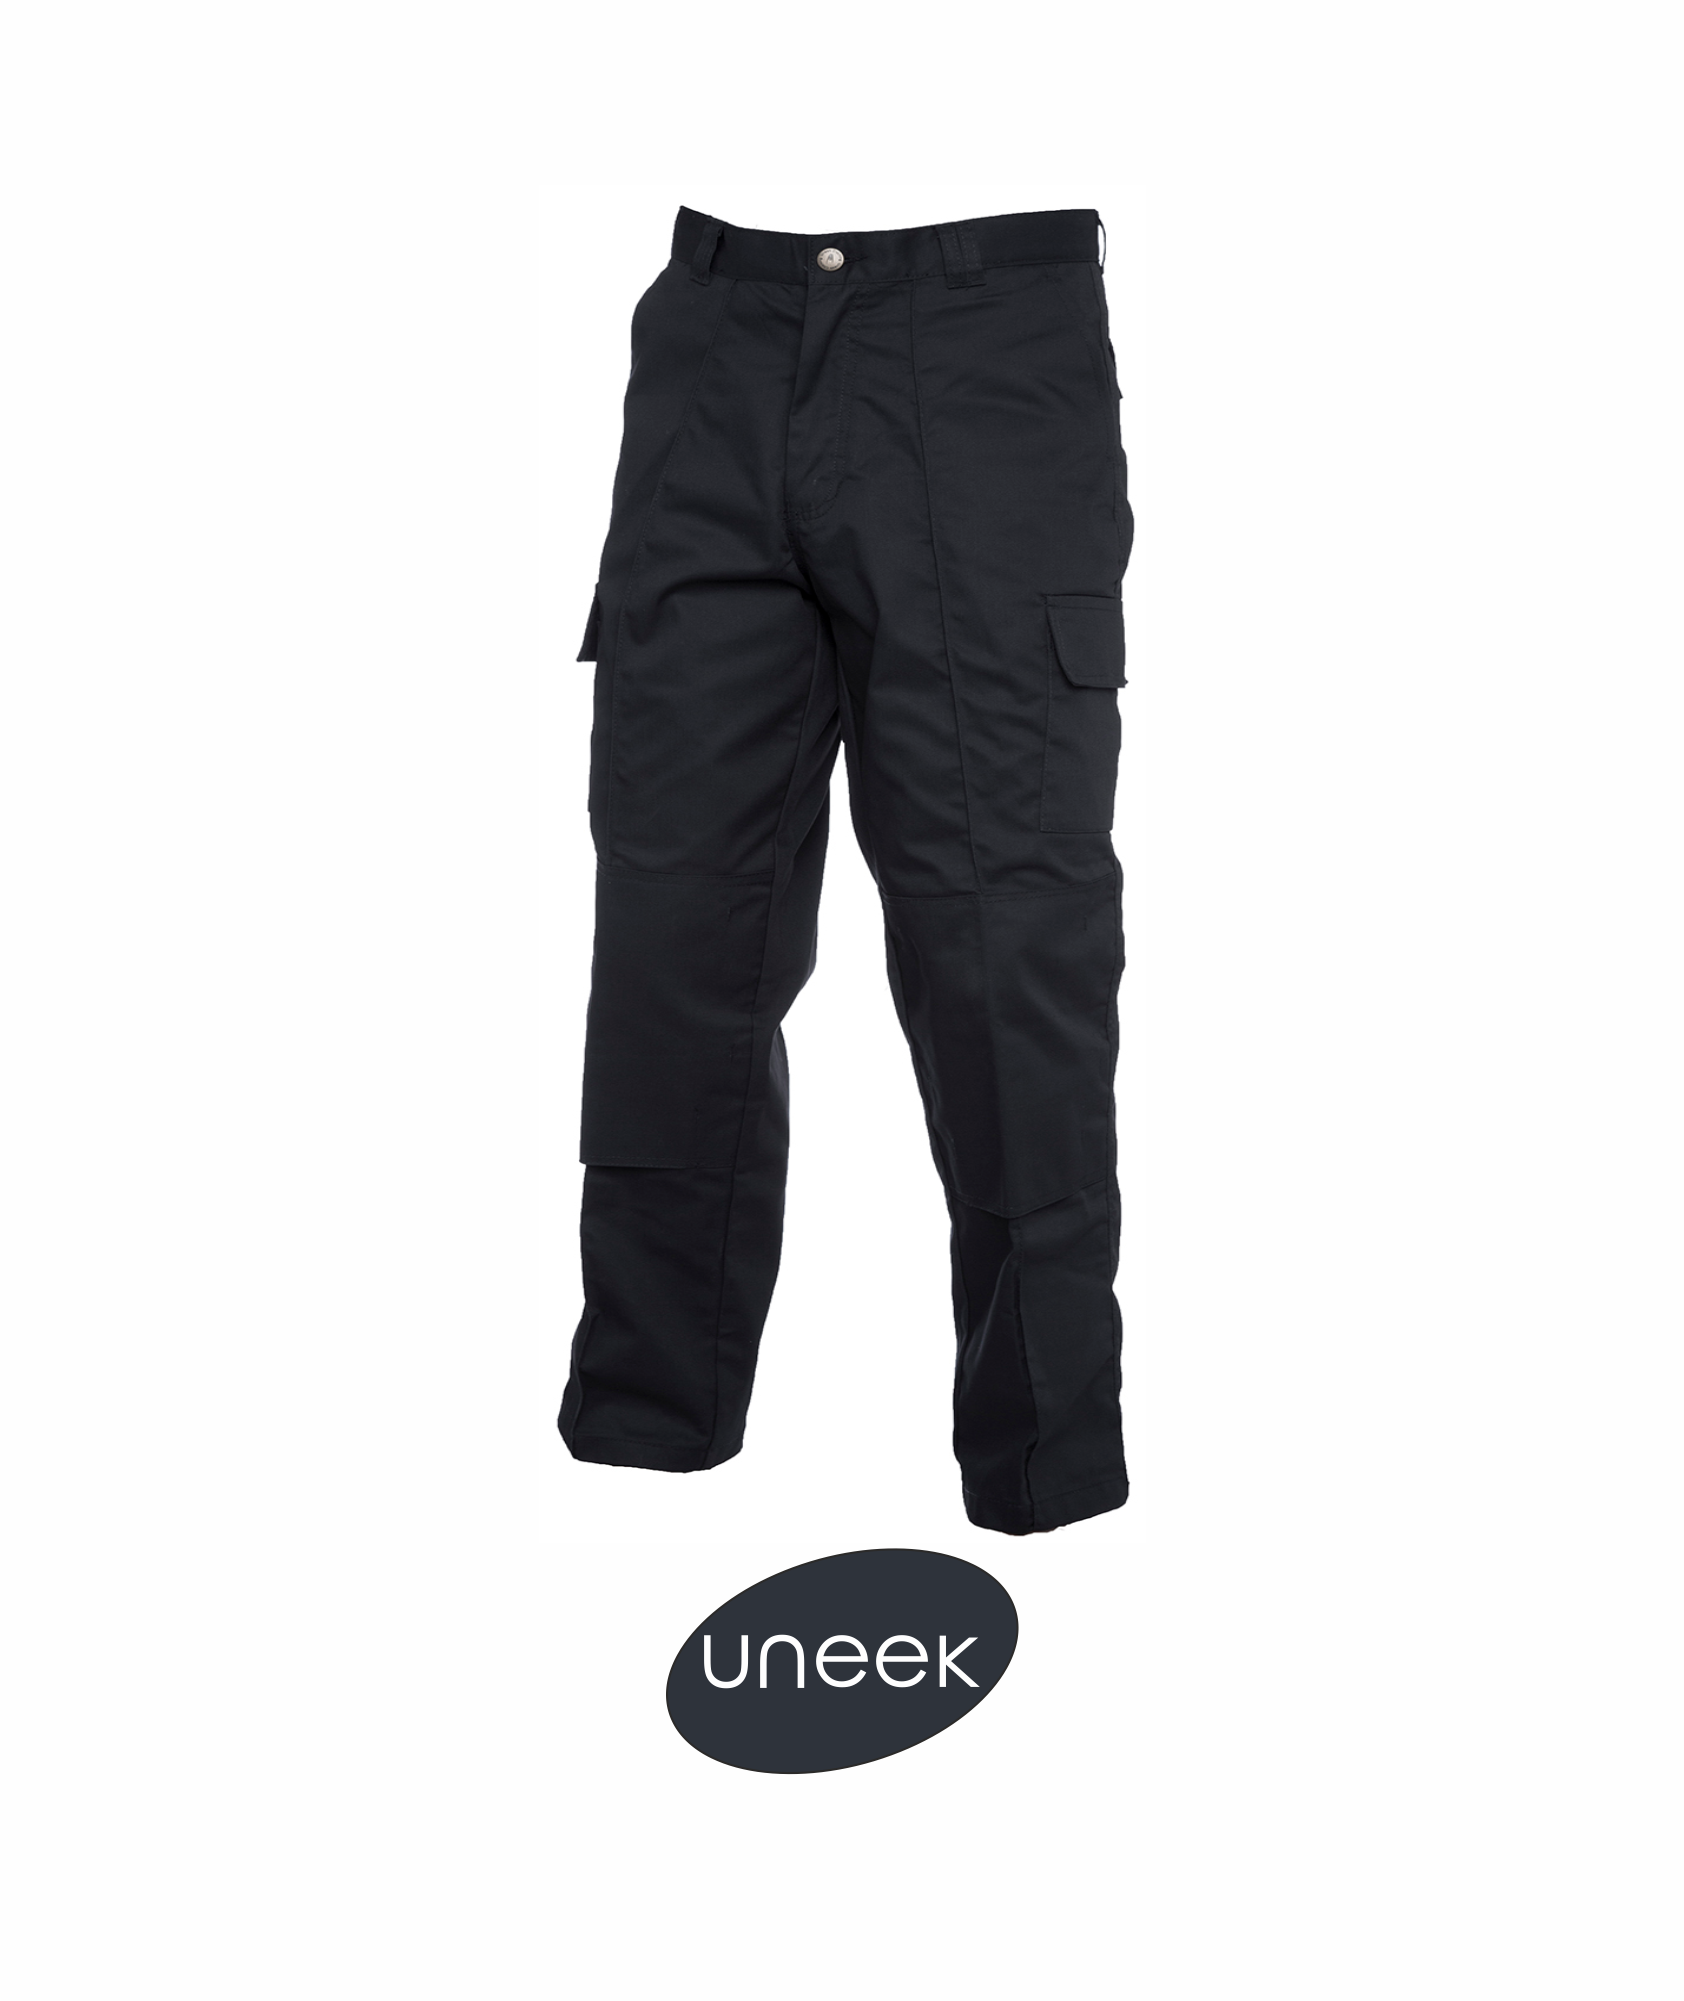 Uneek Cargo Trouser with knee pad pockets — Stitch to Stitch